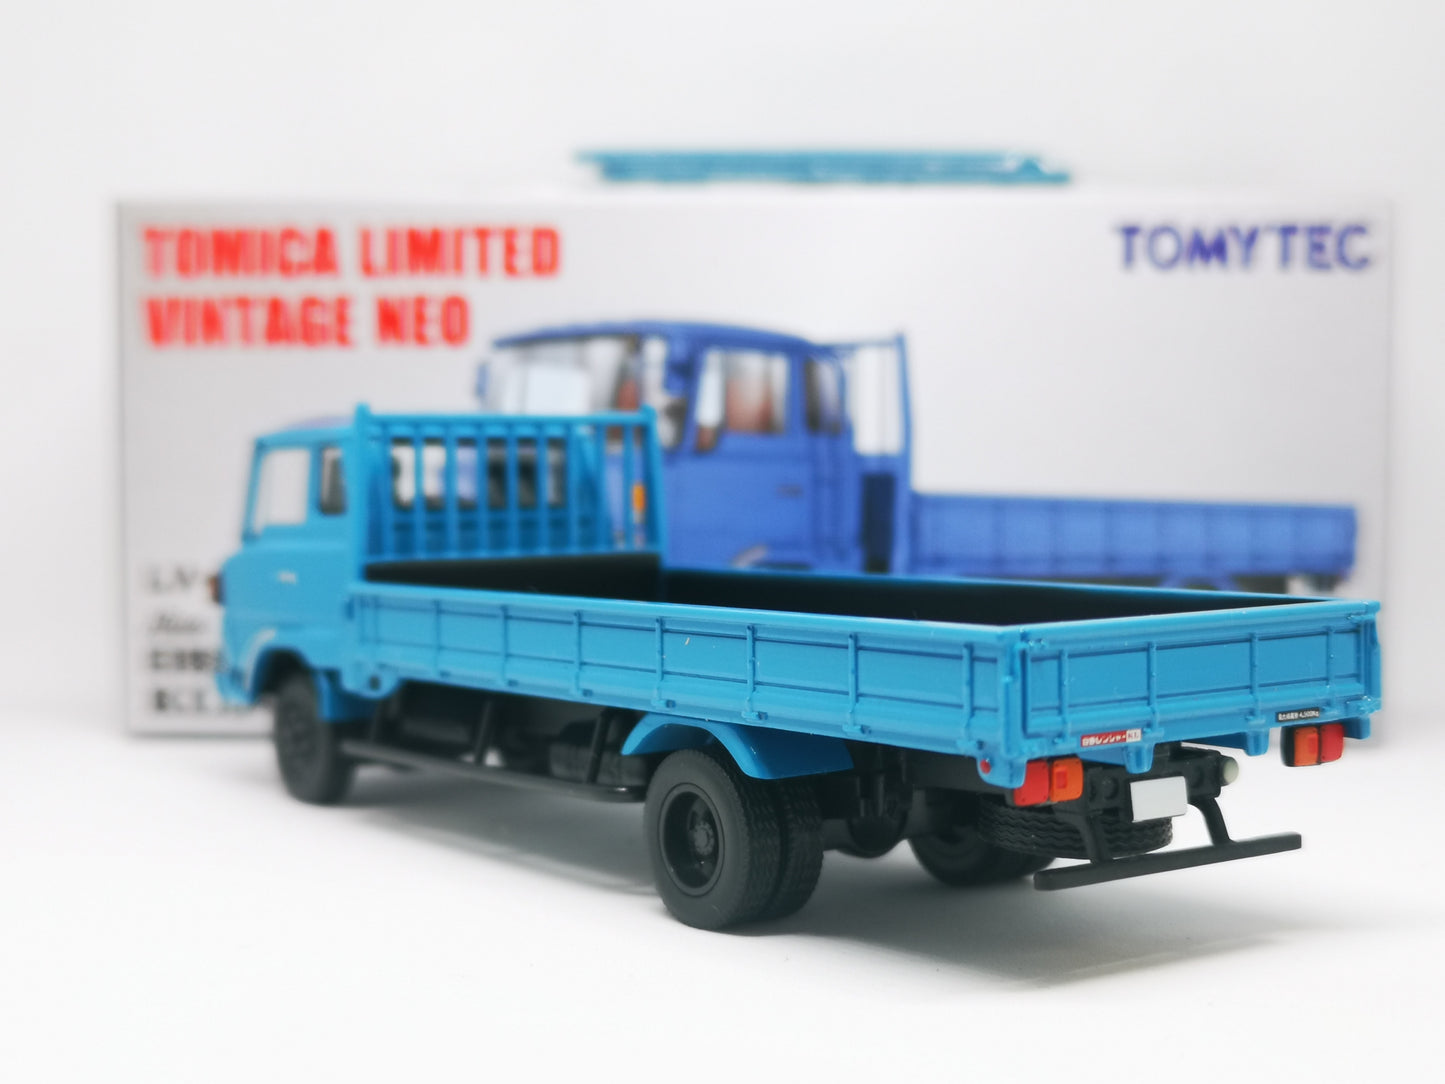 Tomica Limited Vintage Neo LV-N162c Hino Ranger KL545 Takara Tomy